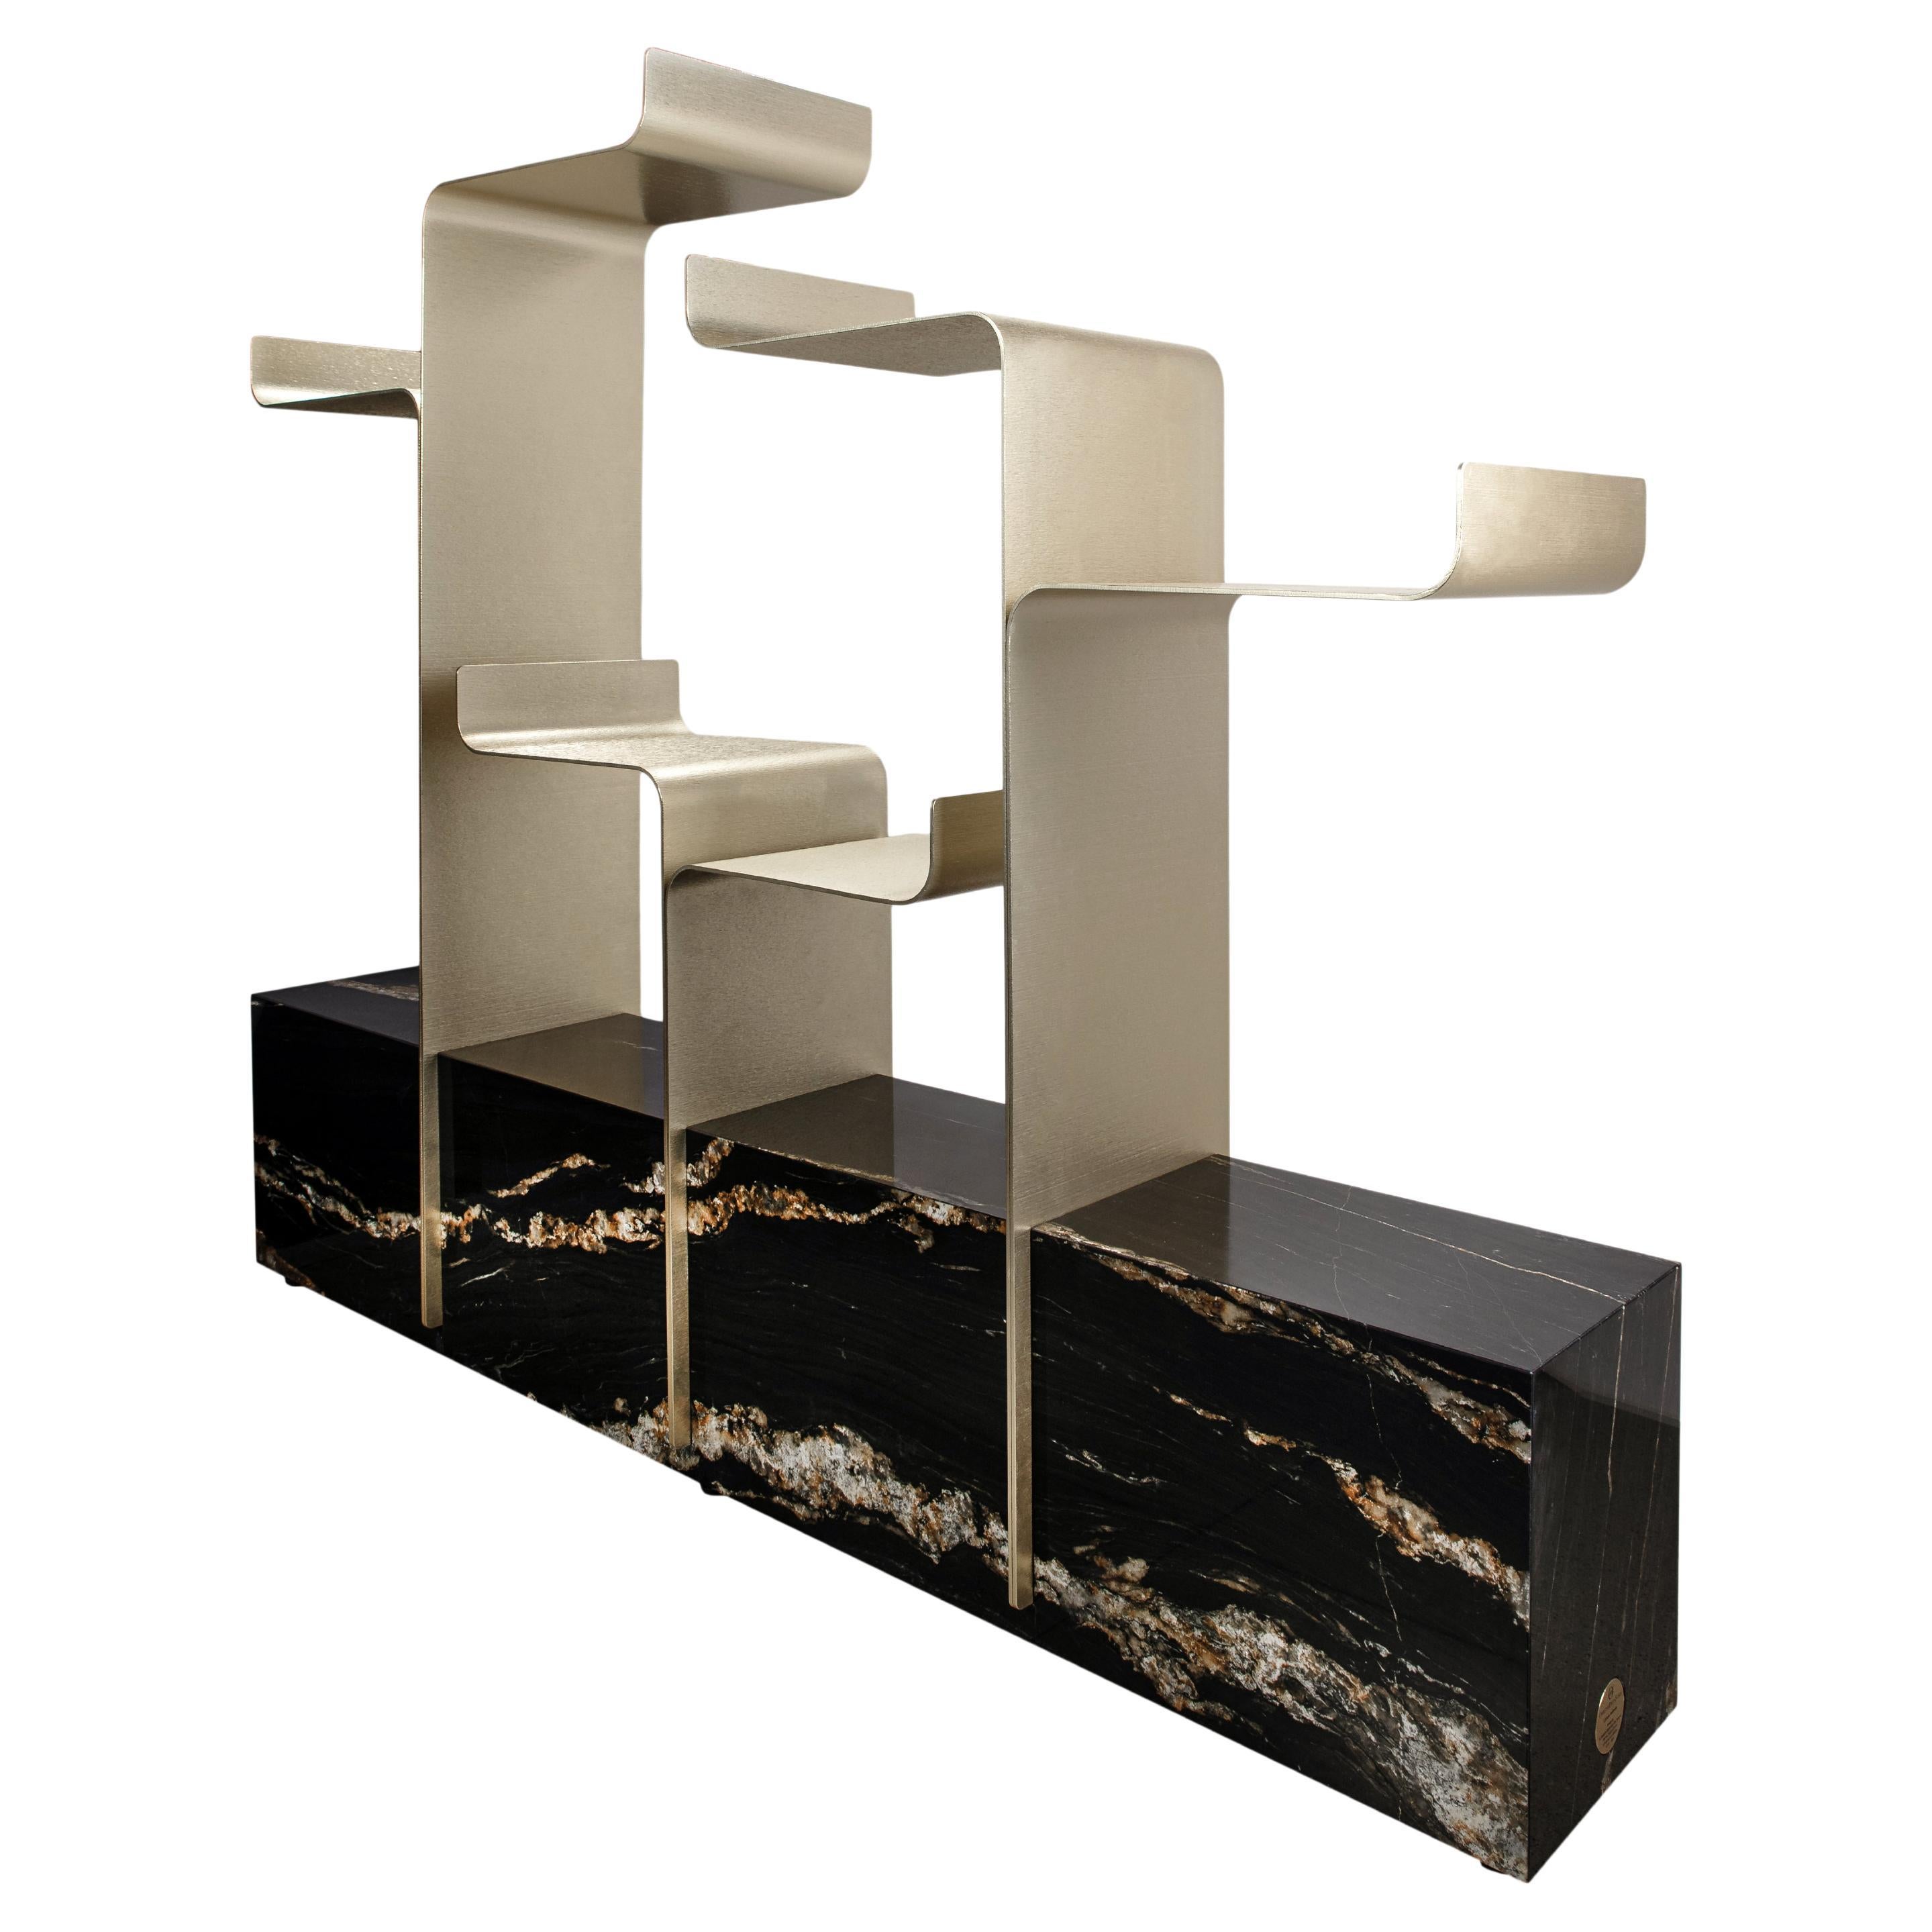 Tropical Stone "Aedicula" Bookcase design by MMDesign for Officina della Scala For Sale